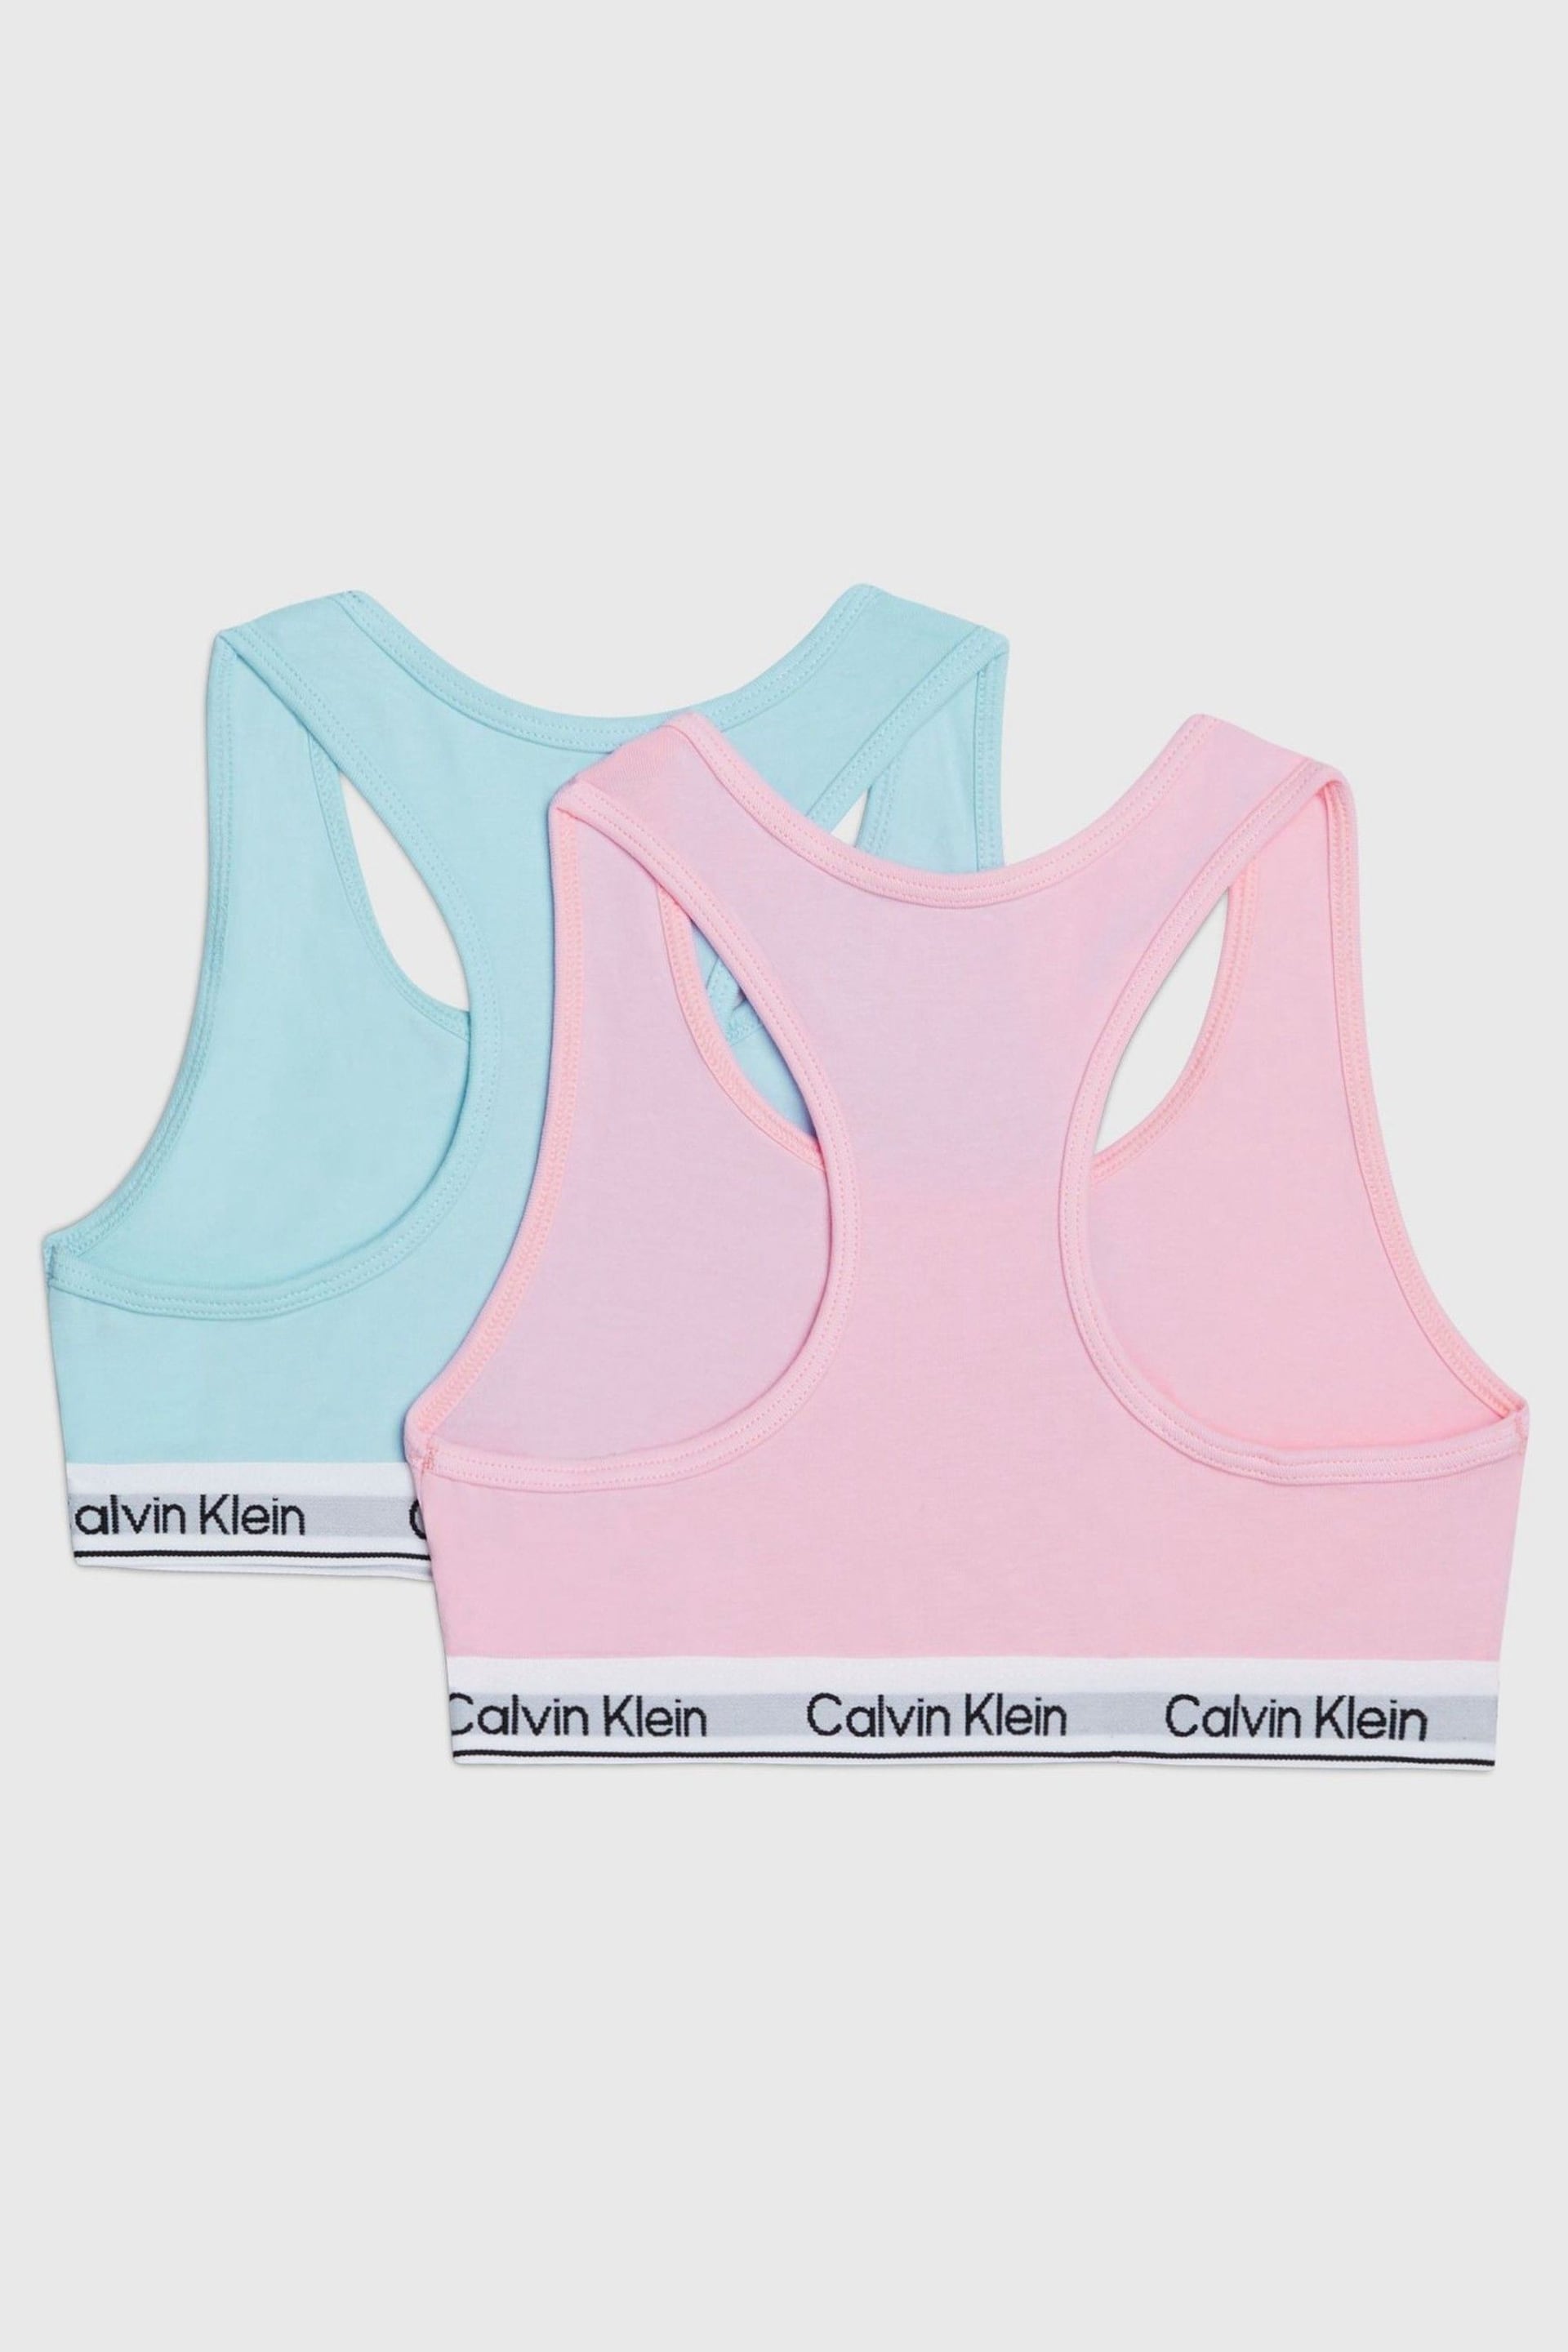 Calvin Klein Pink Bralette 2 Pack - Image 2 of 2